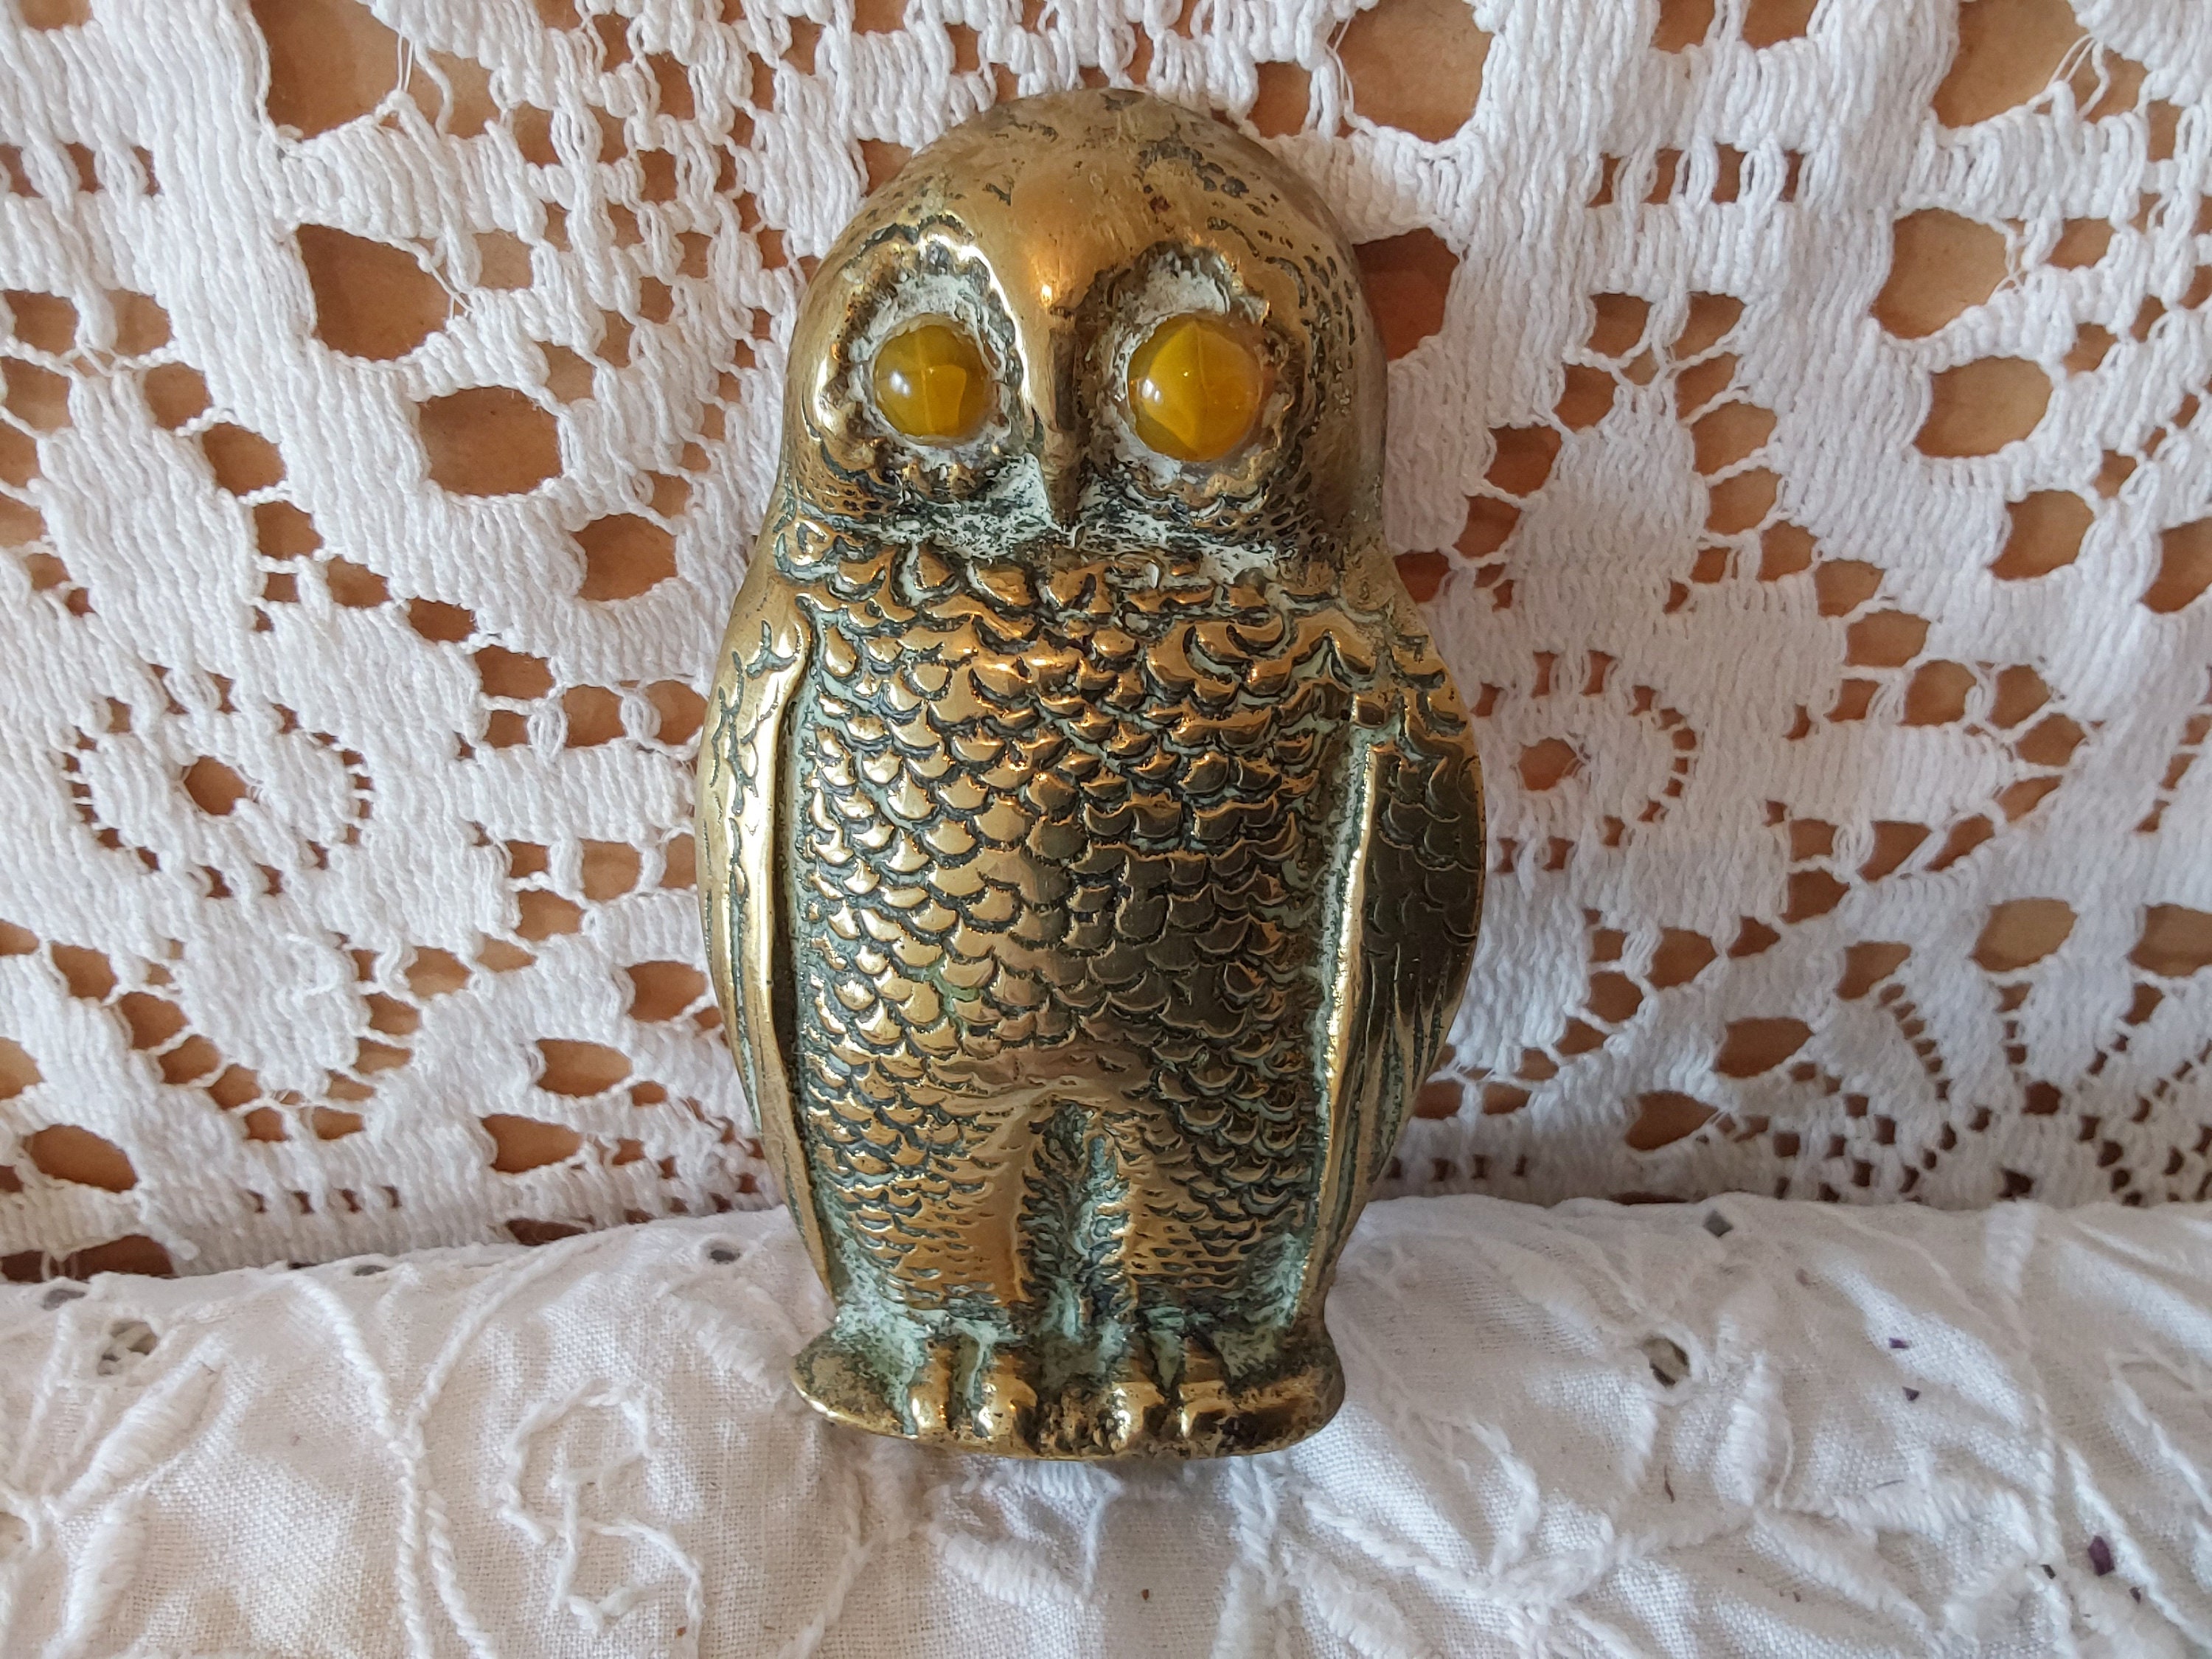 DIY Bath Bomb Making Kit - The Brass Owl